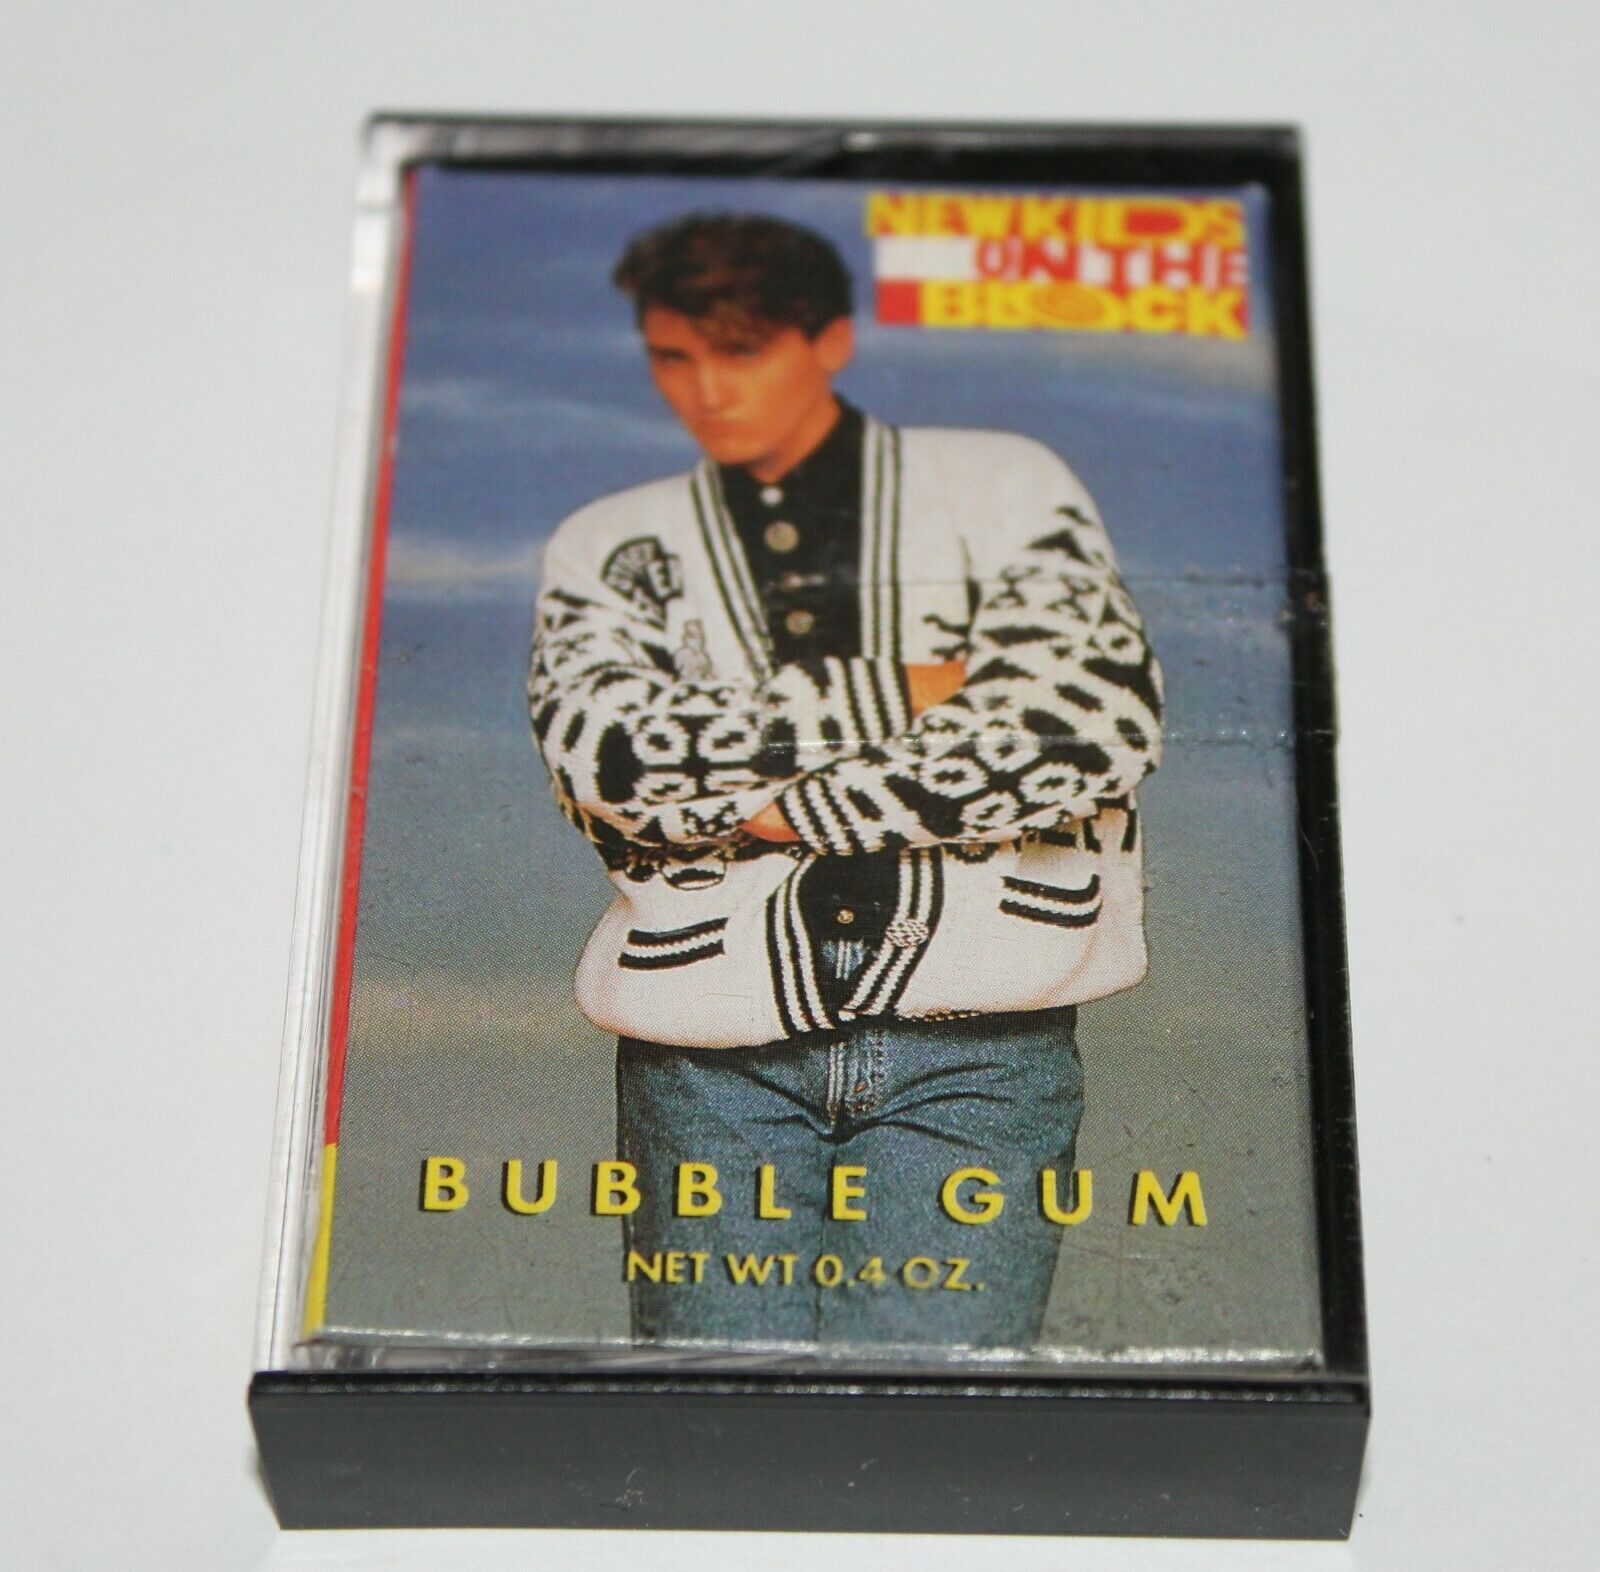 NEW KIDS ON THE BLOCK Jonathan Bubble Gum Candy Mini Cassette Tape Case #21